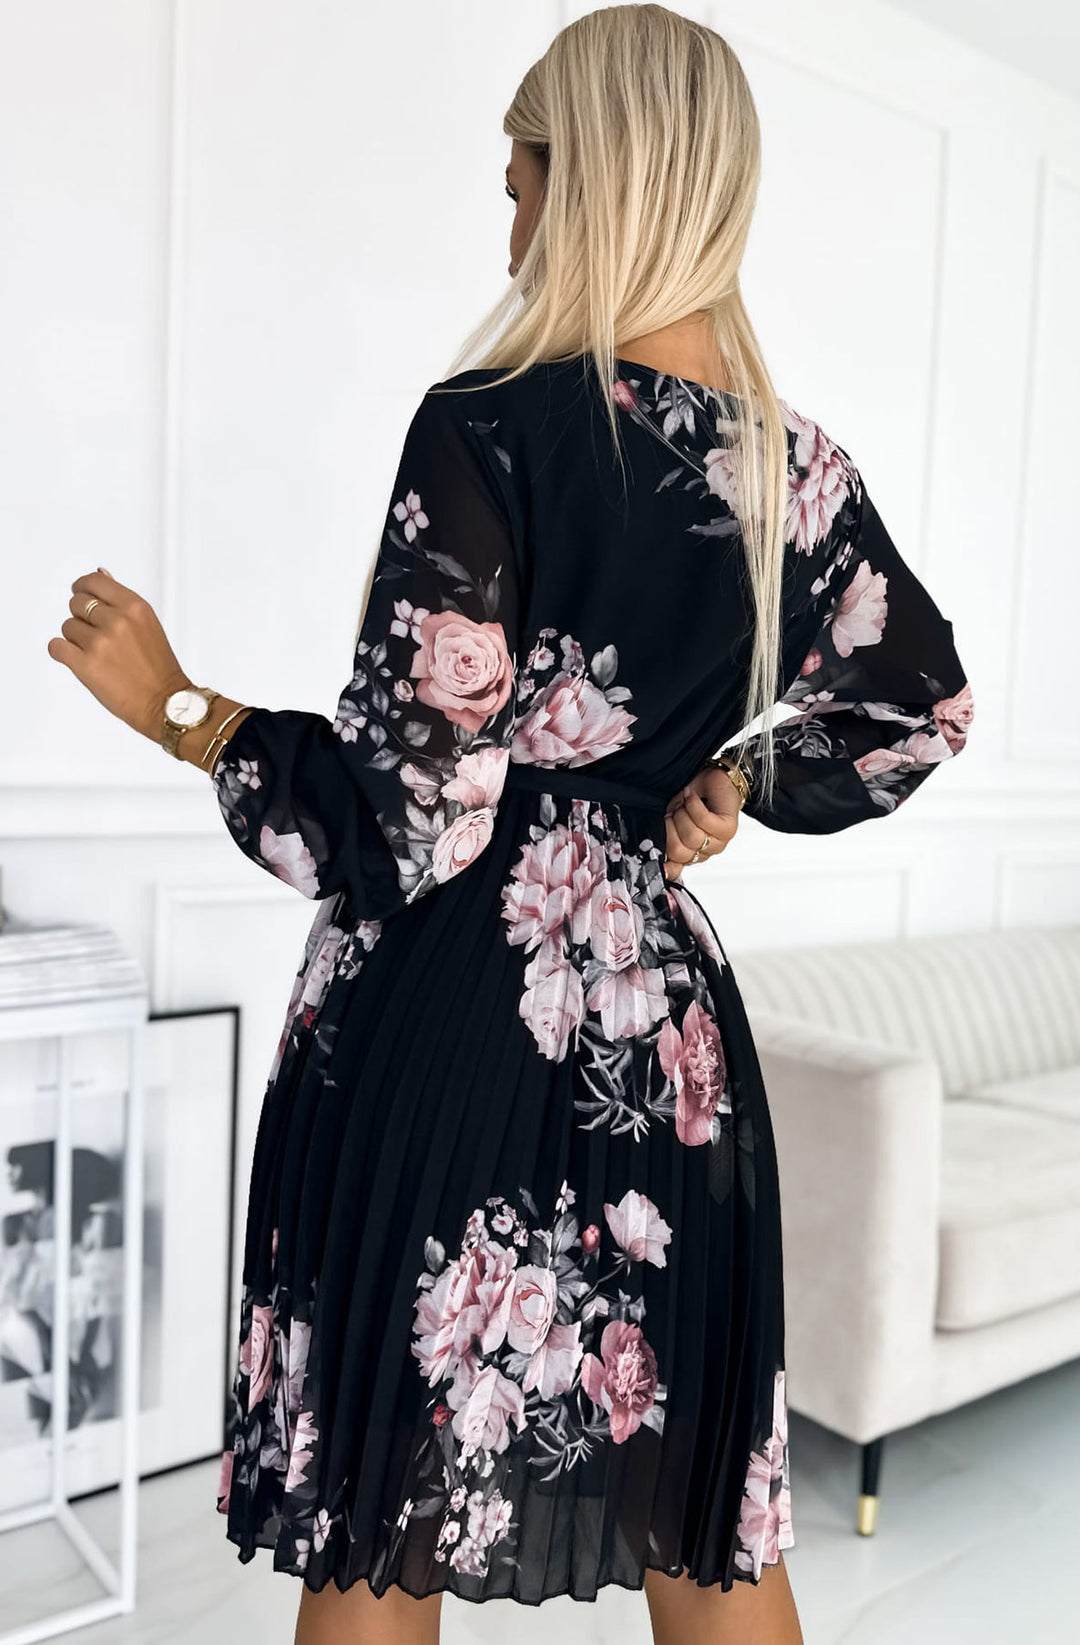 Joanie Black Floral Long Sleeve Chiffon Pleated Knee Length Dress (PRE-ORDER)